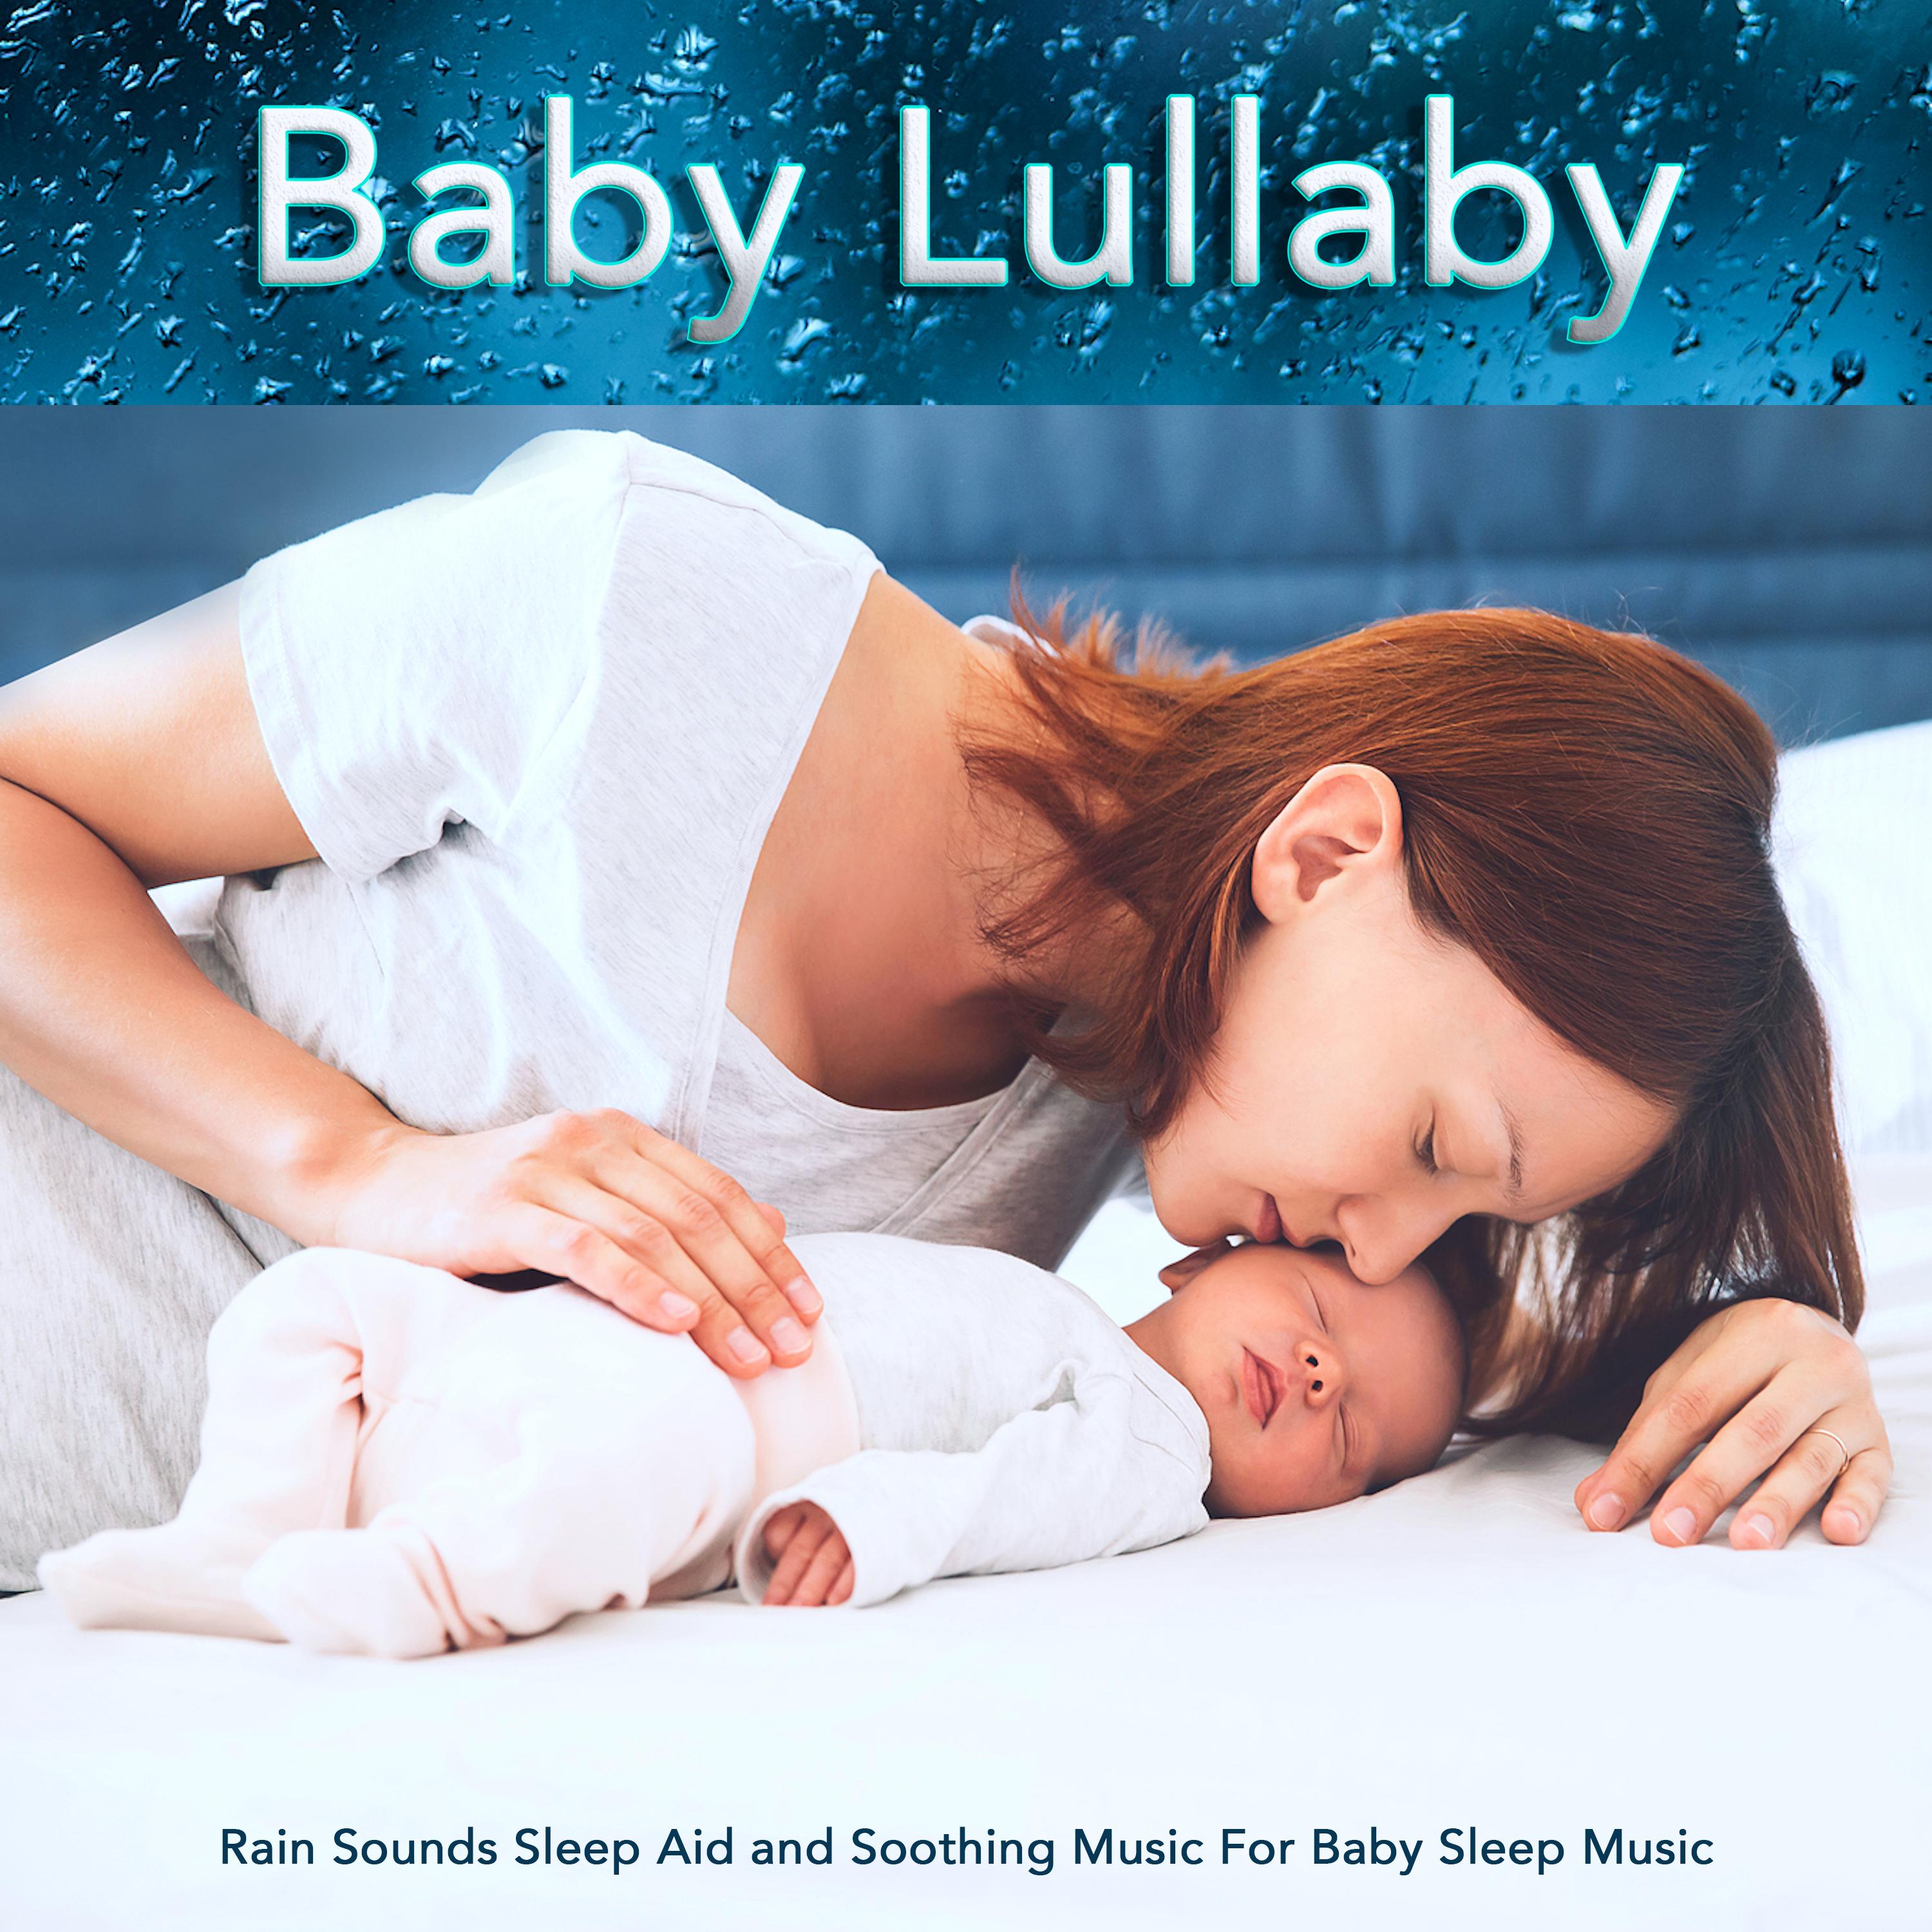 Tranquil Rain Sounds For Baby Sleep Aid